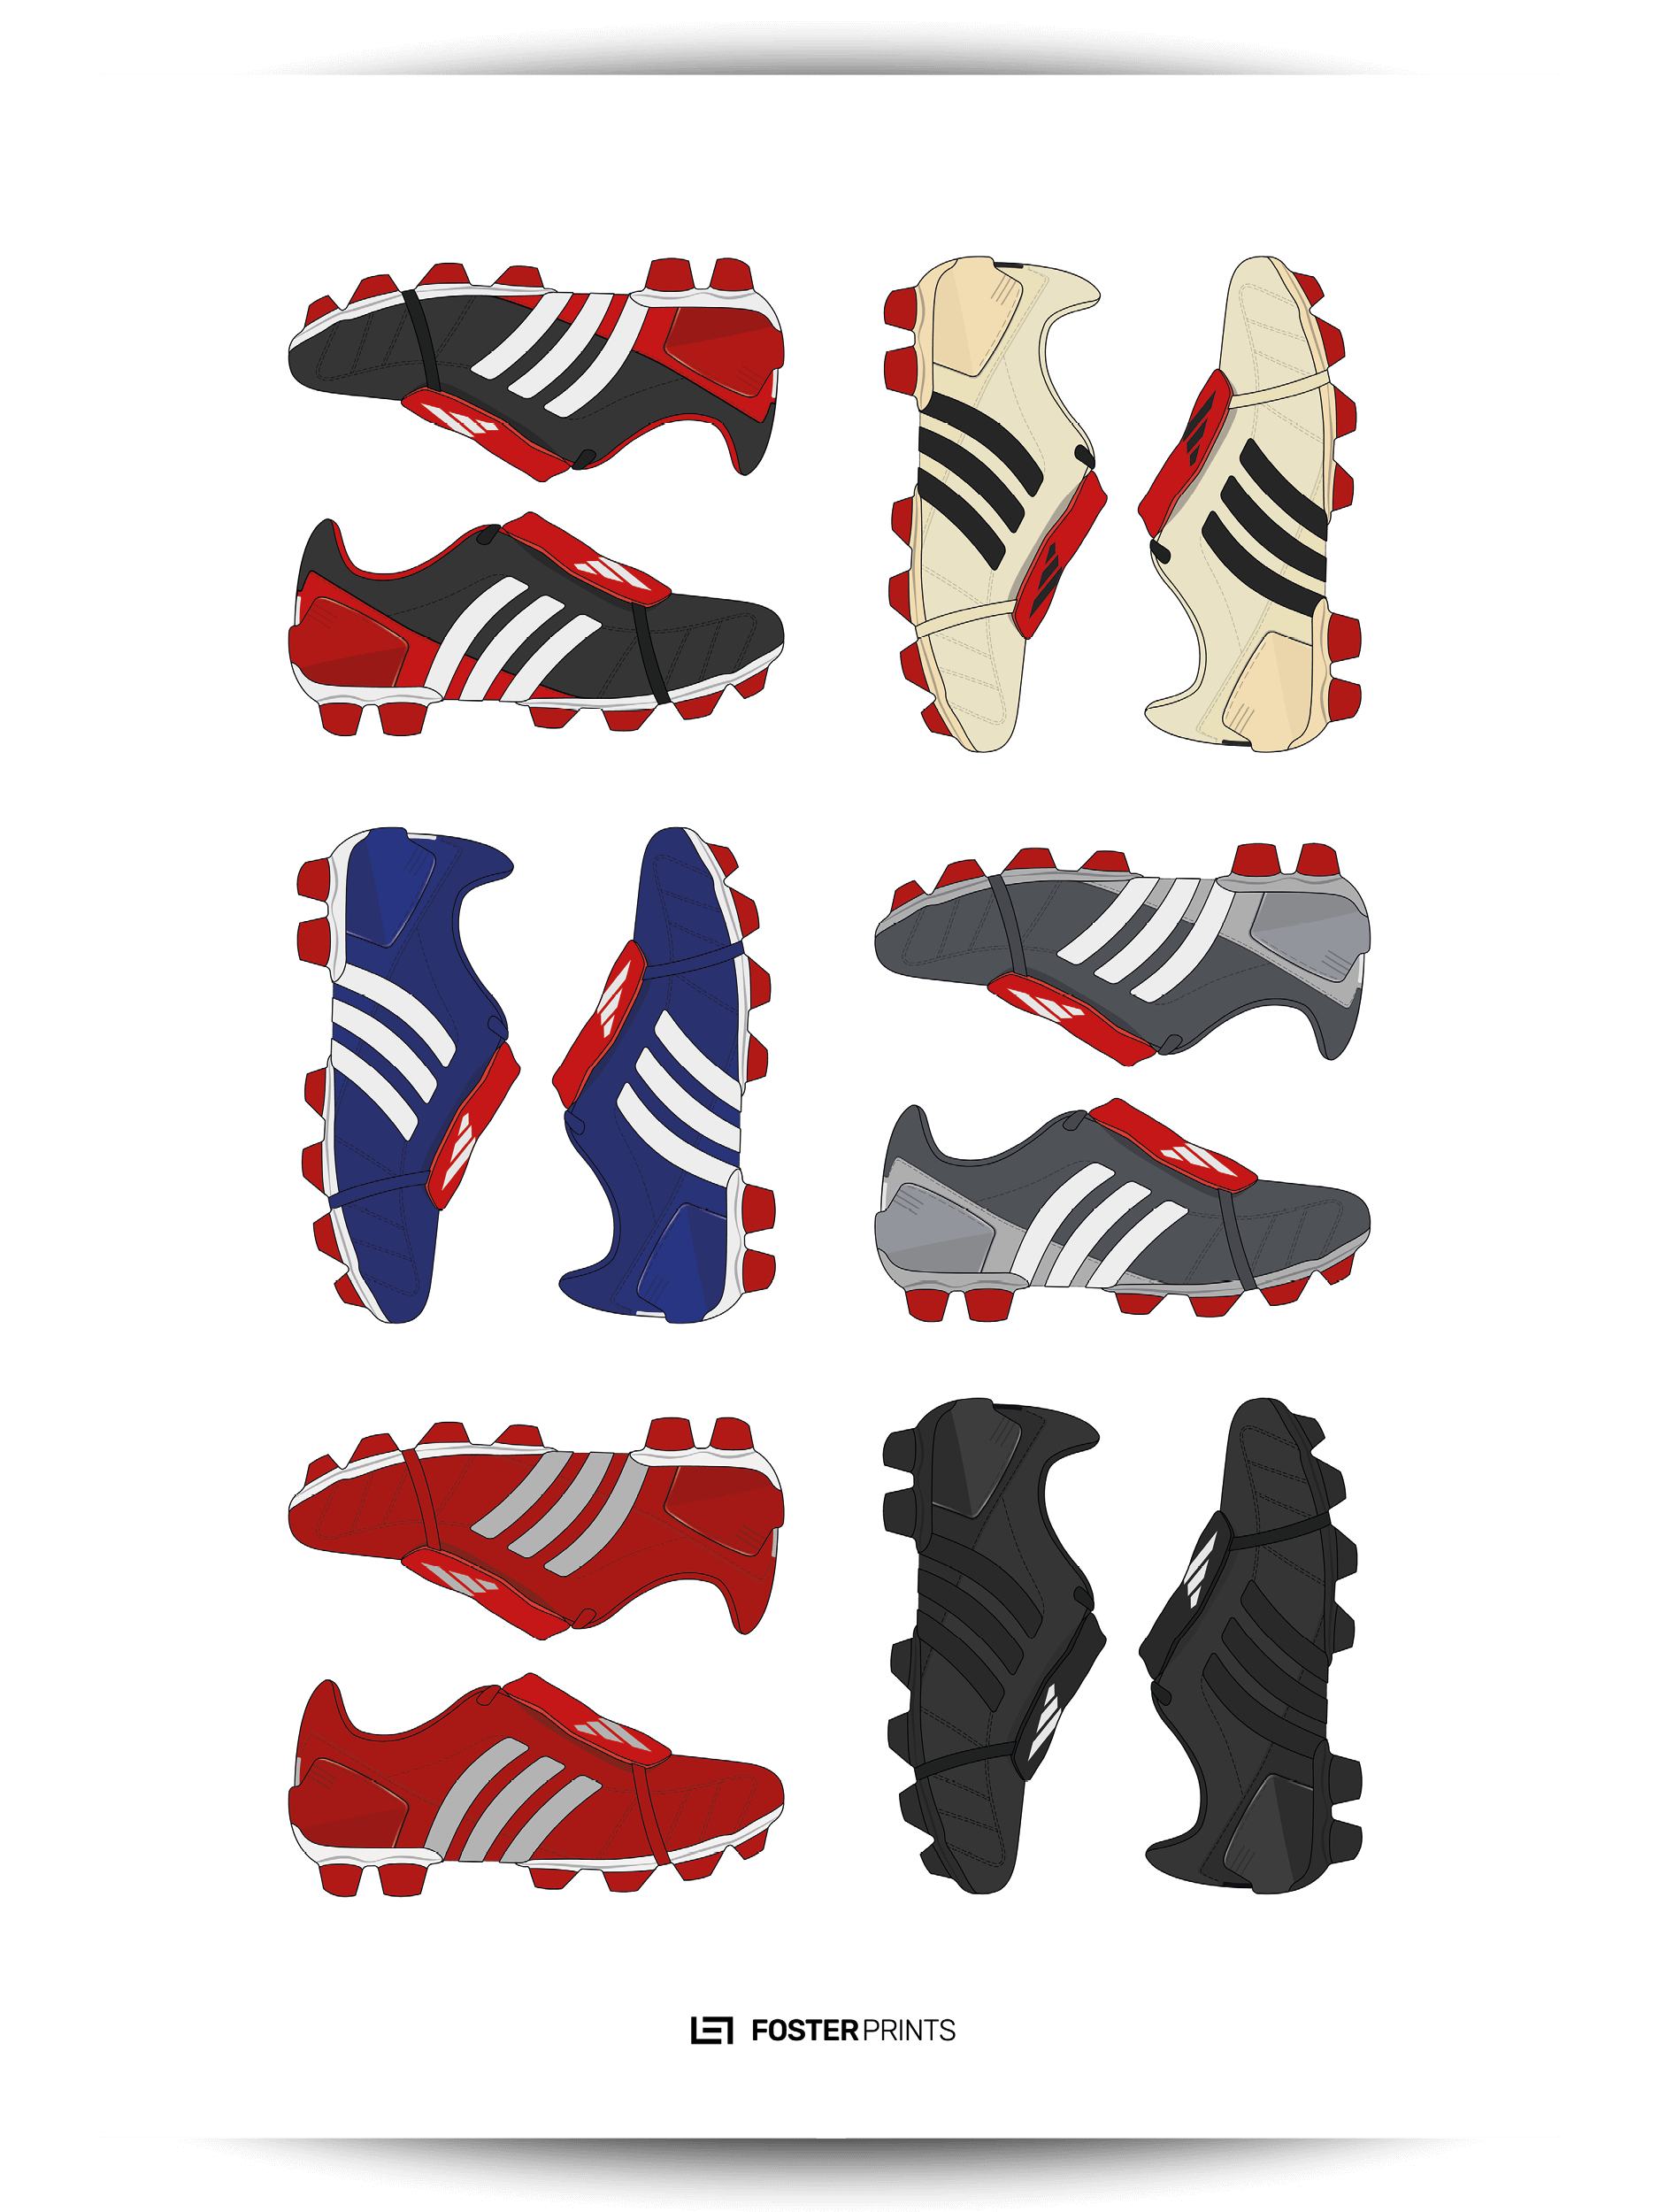 adidas mania football boots